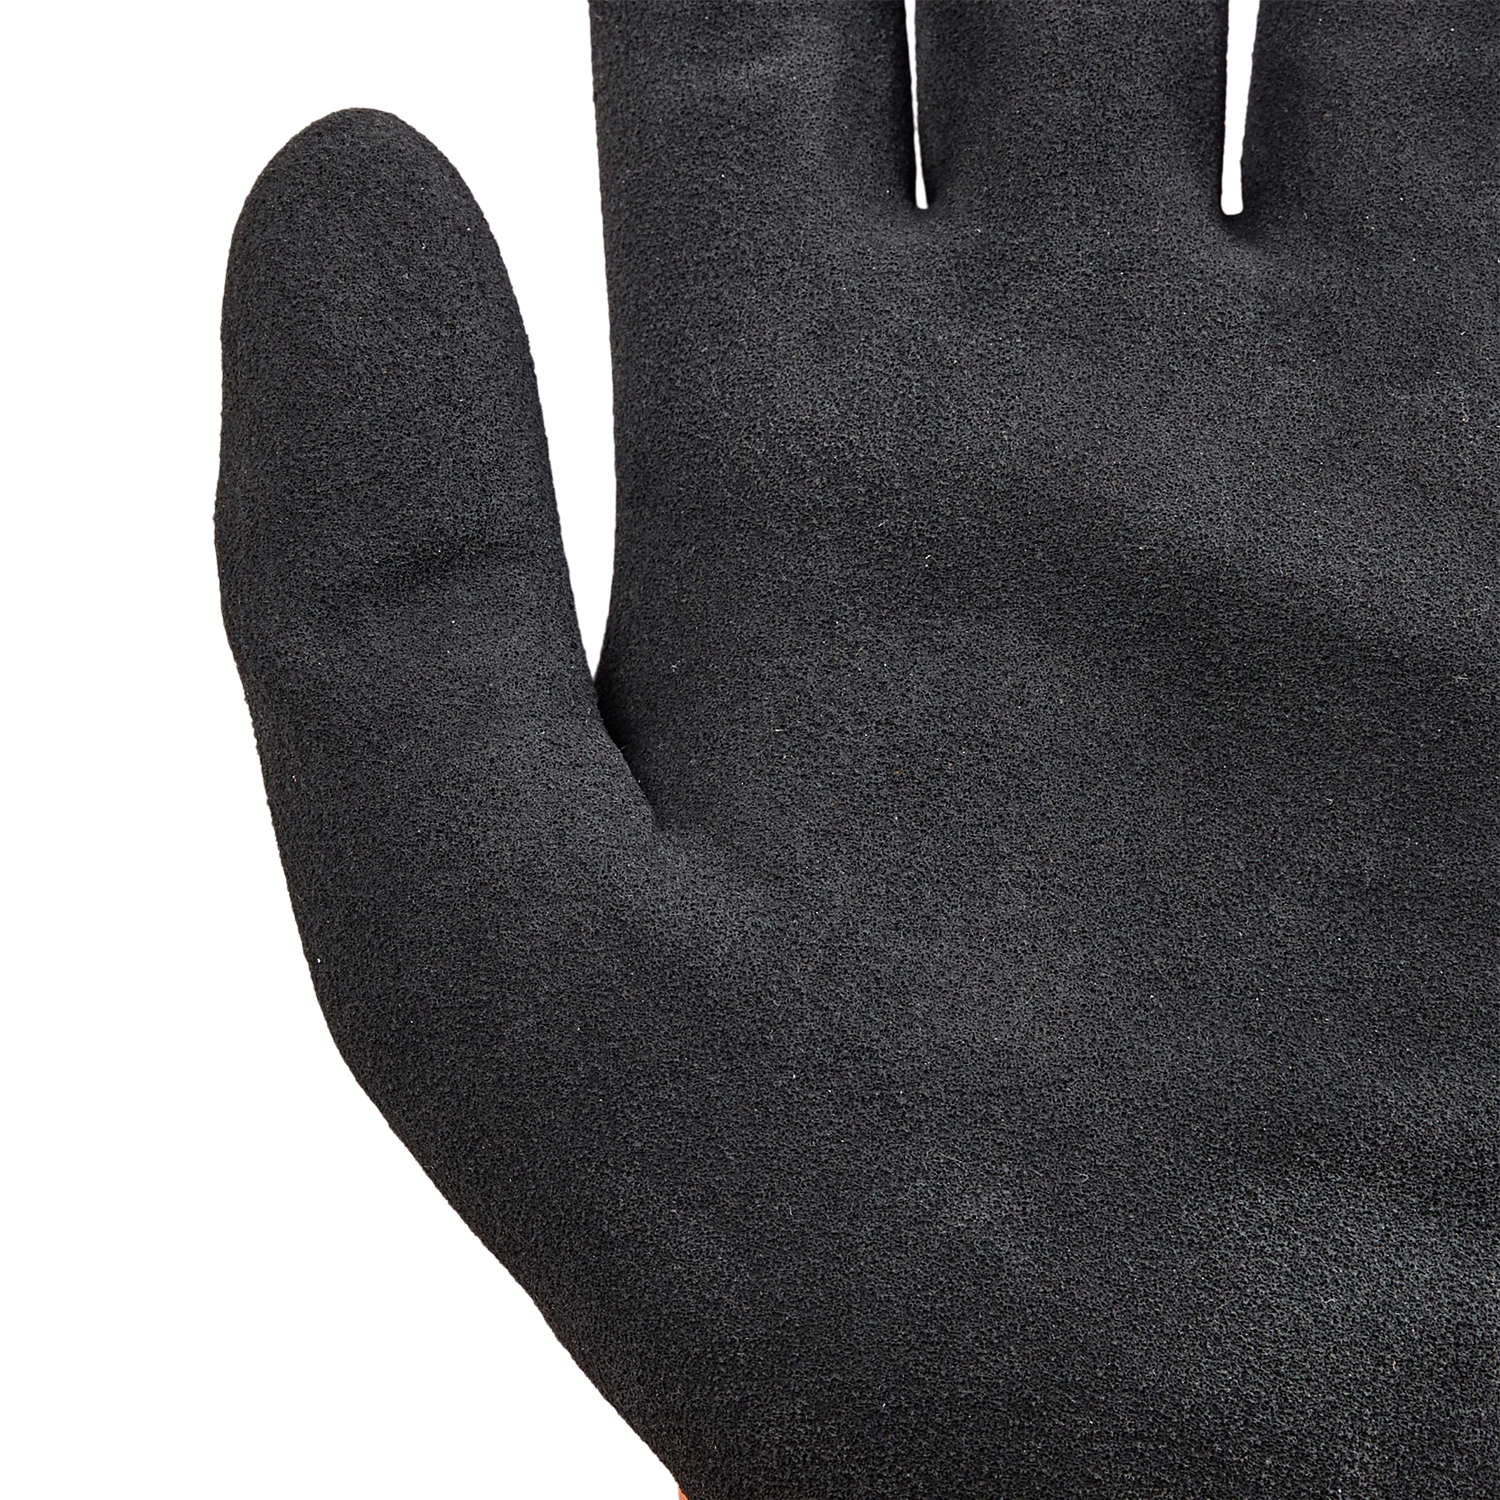 NORSE Arctic guantes de montaje de invierno impermeables talla 11